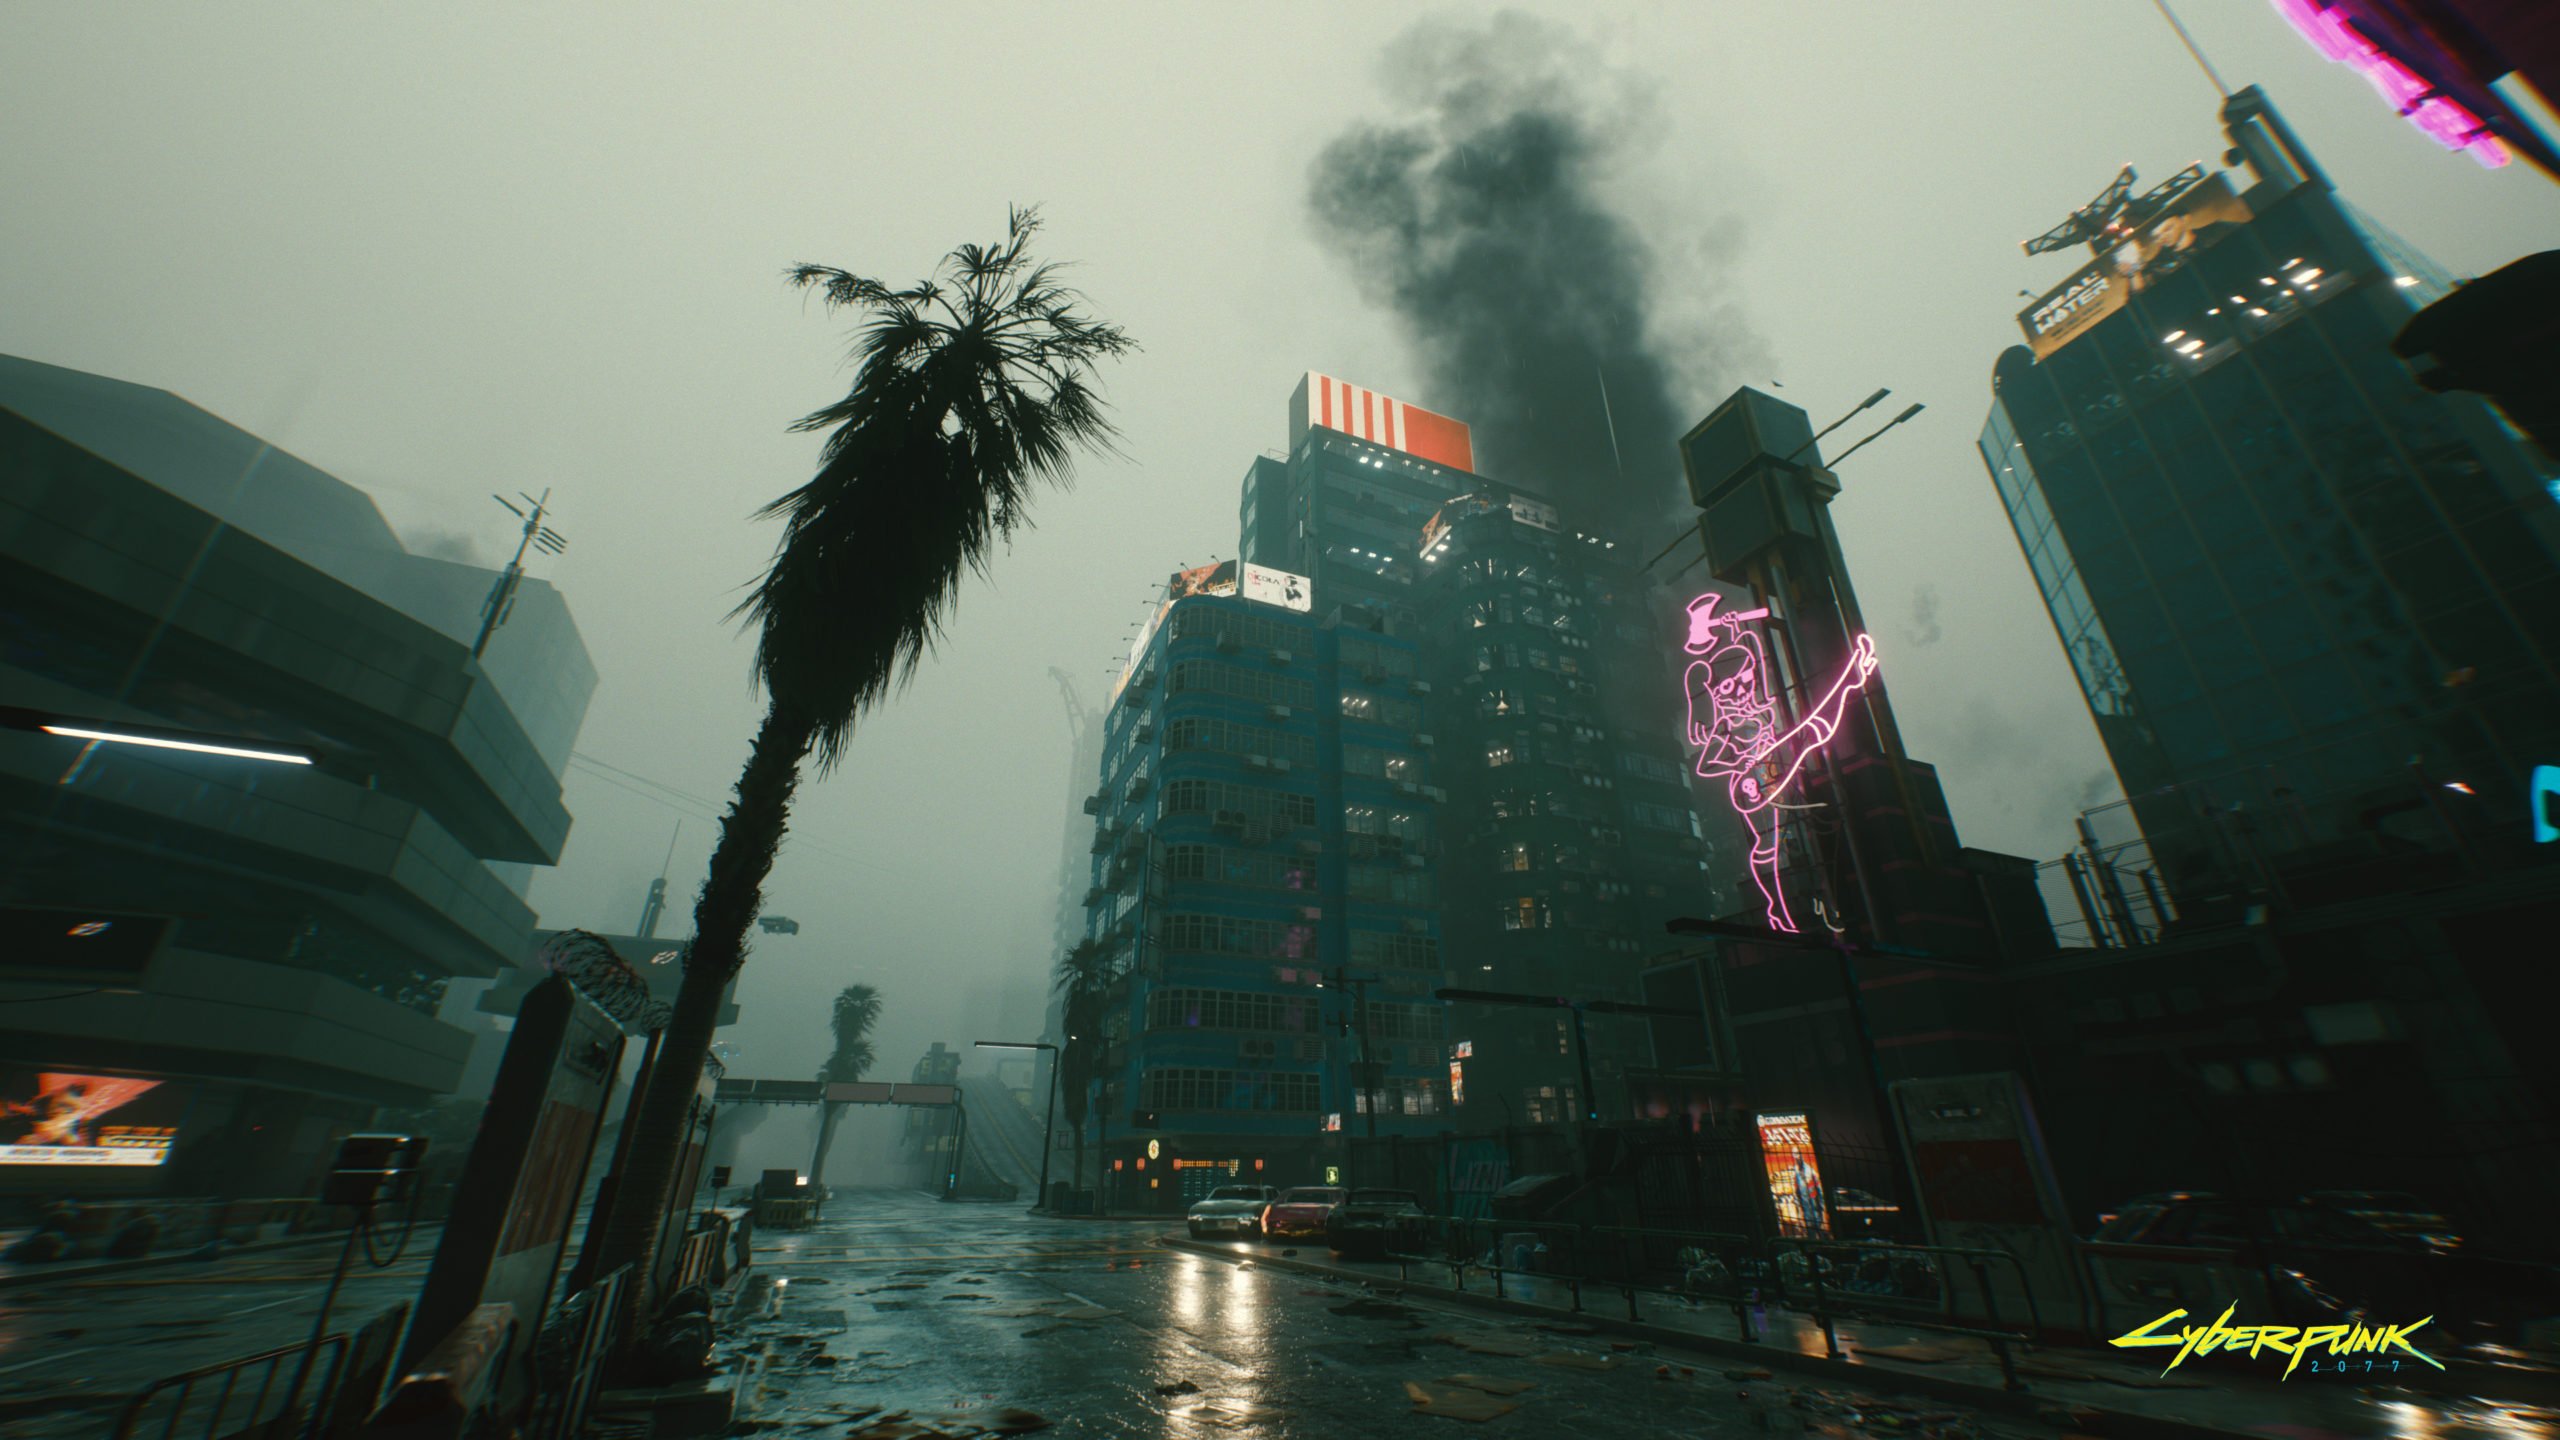 Night City Wire apresenta novidades sobre Cyberpunk 2077 – Pizza Fria